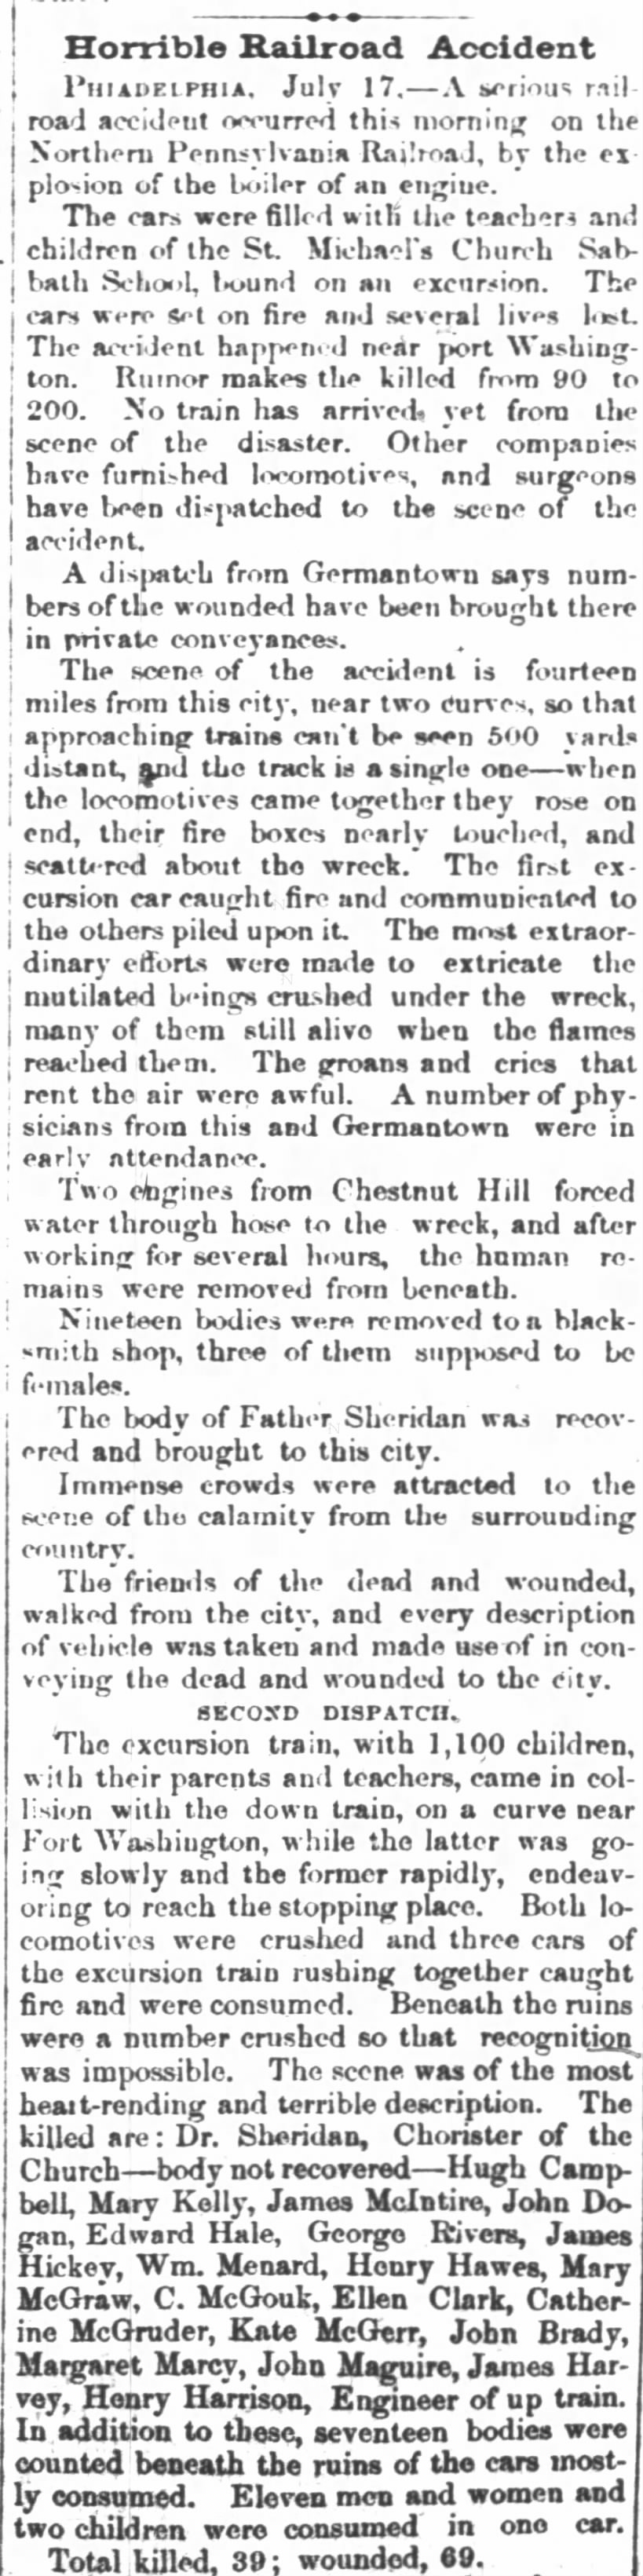 1856 Train Accident Killing Hugh Campbell